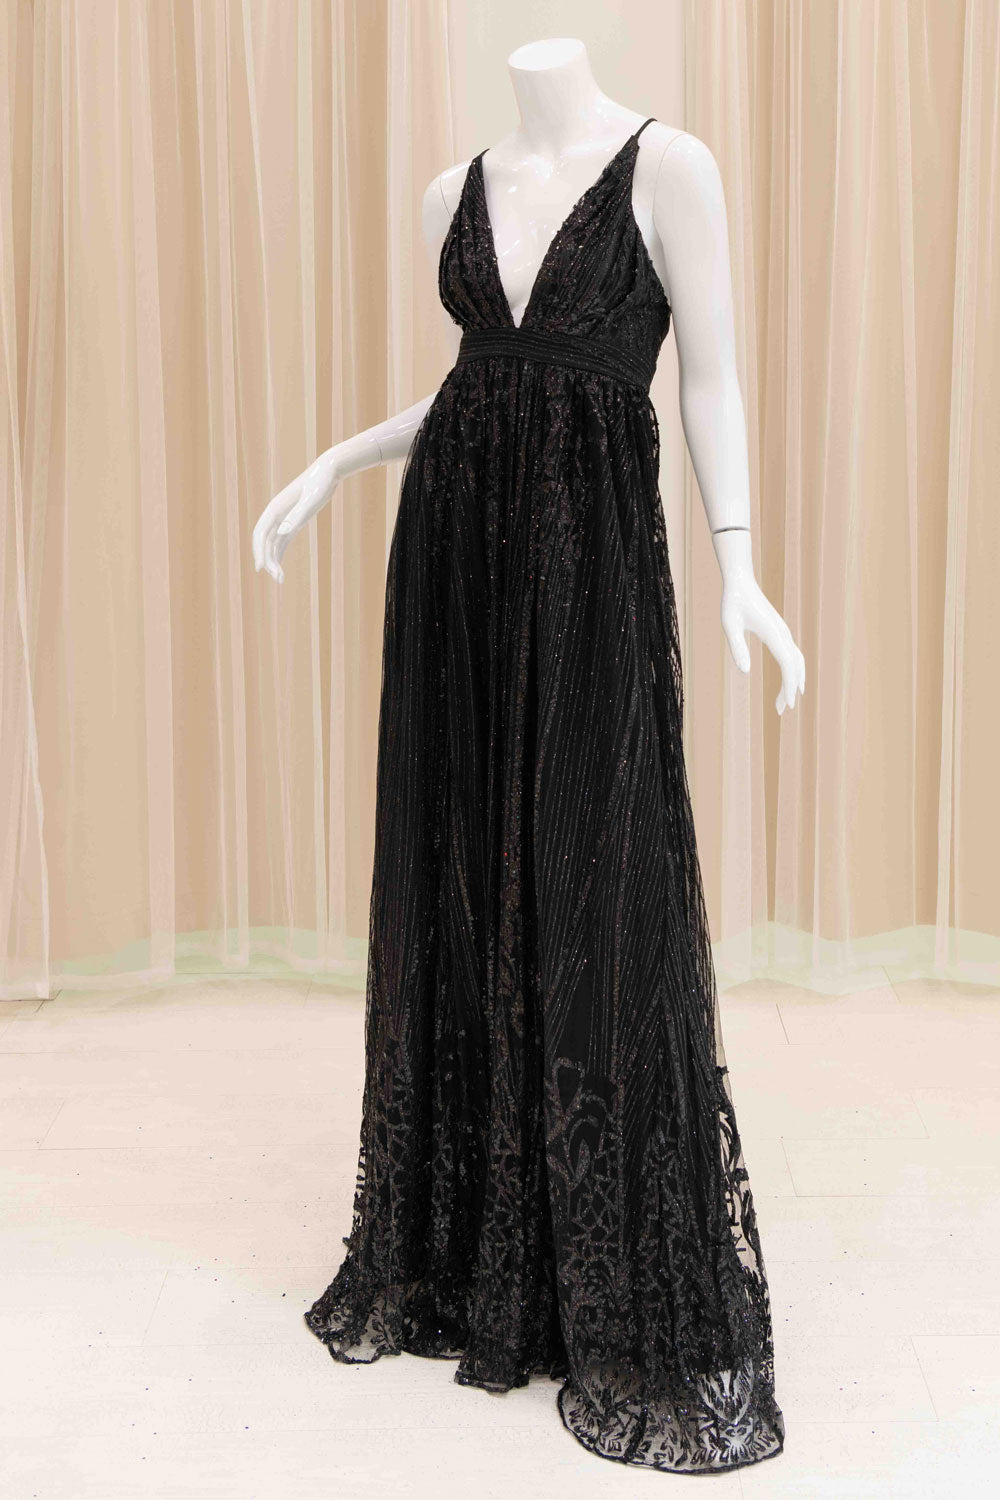 Aliah Marie Glitter Ball Gown in Black